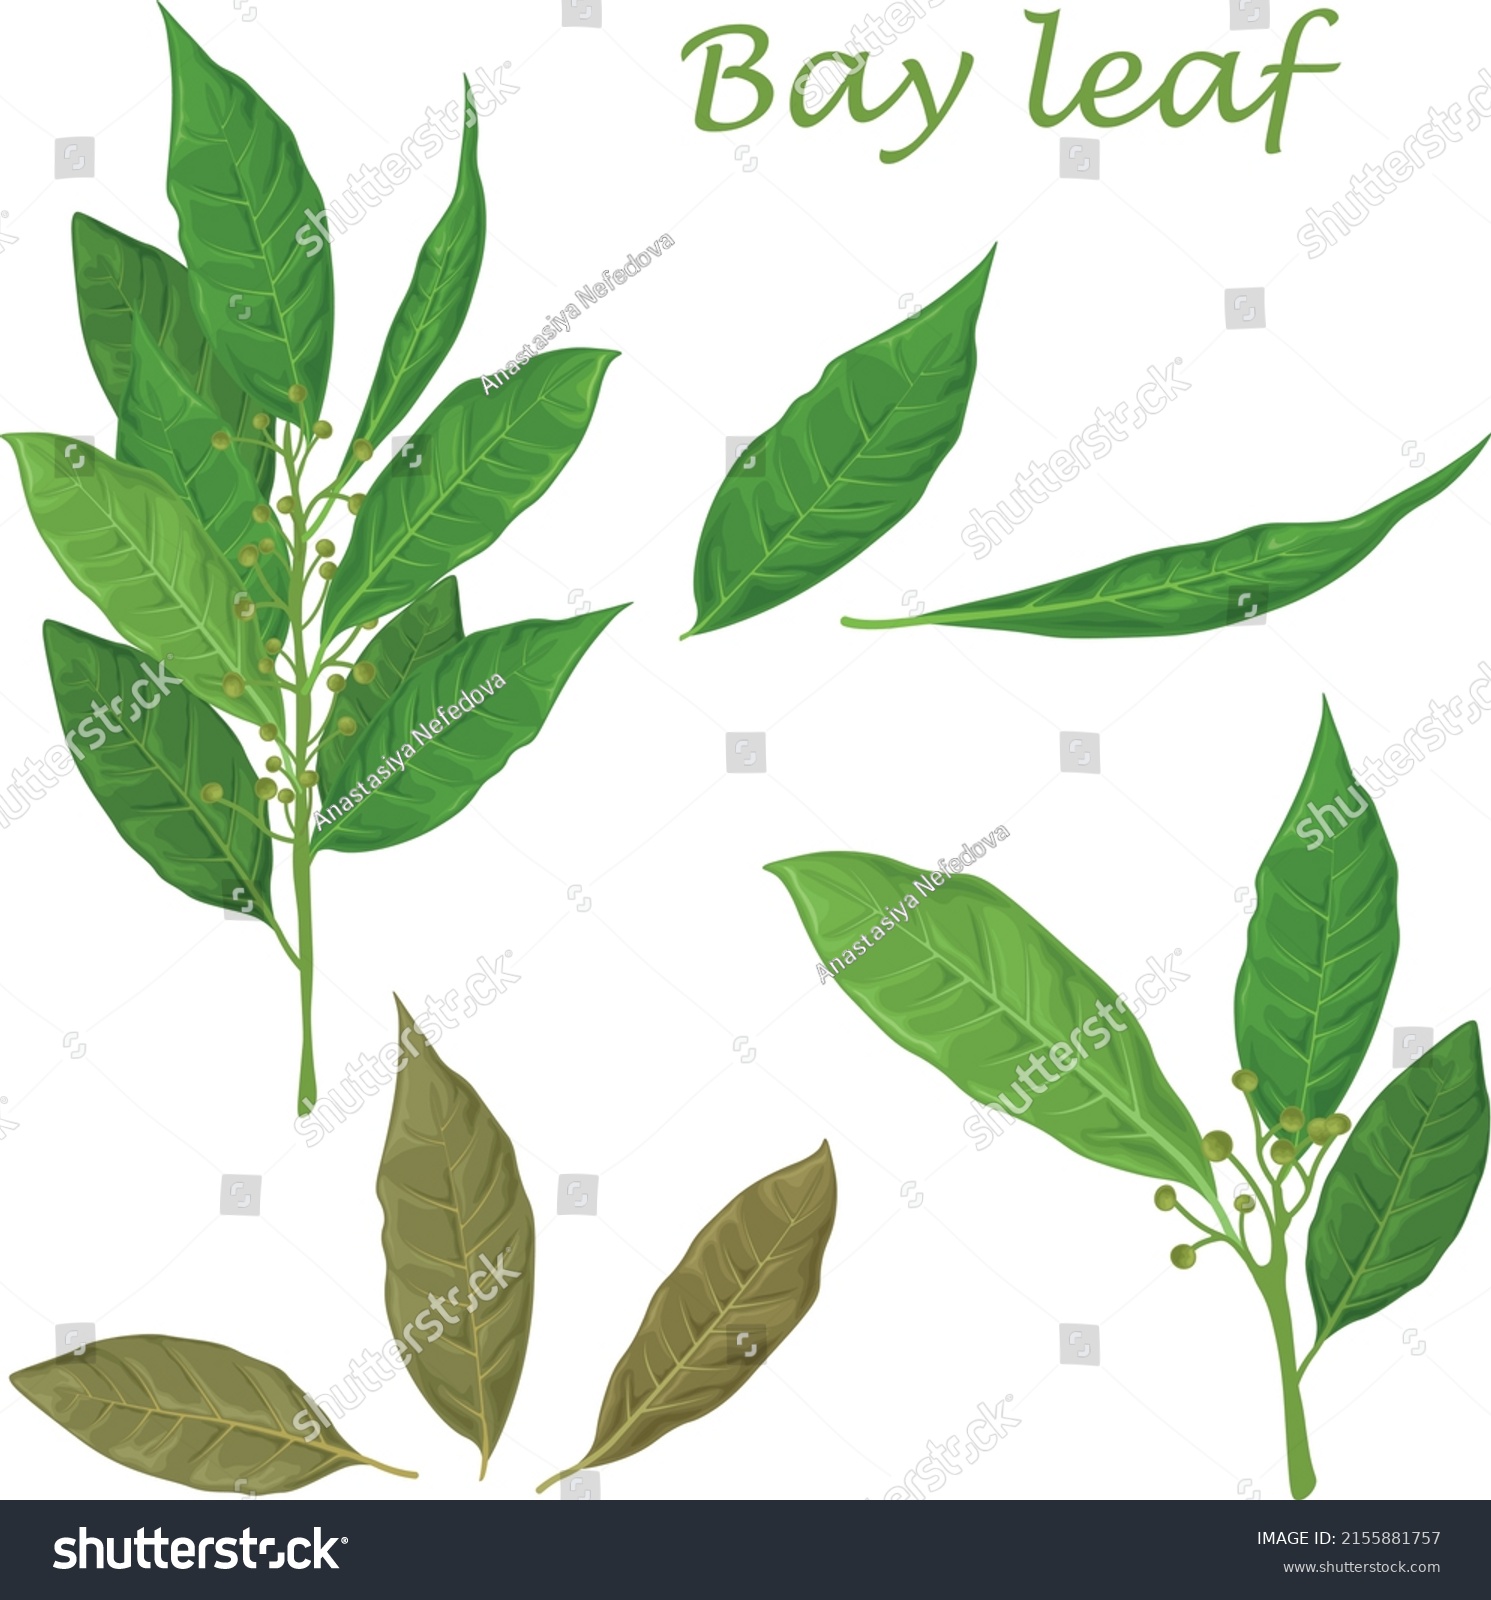 SVG of Bay leaf. Green laurel leaves. A fragrant medicinal plant for seasoning. Vector illustration isolated on a white background svg